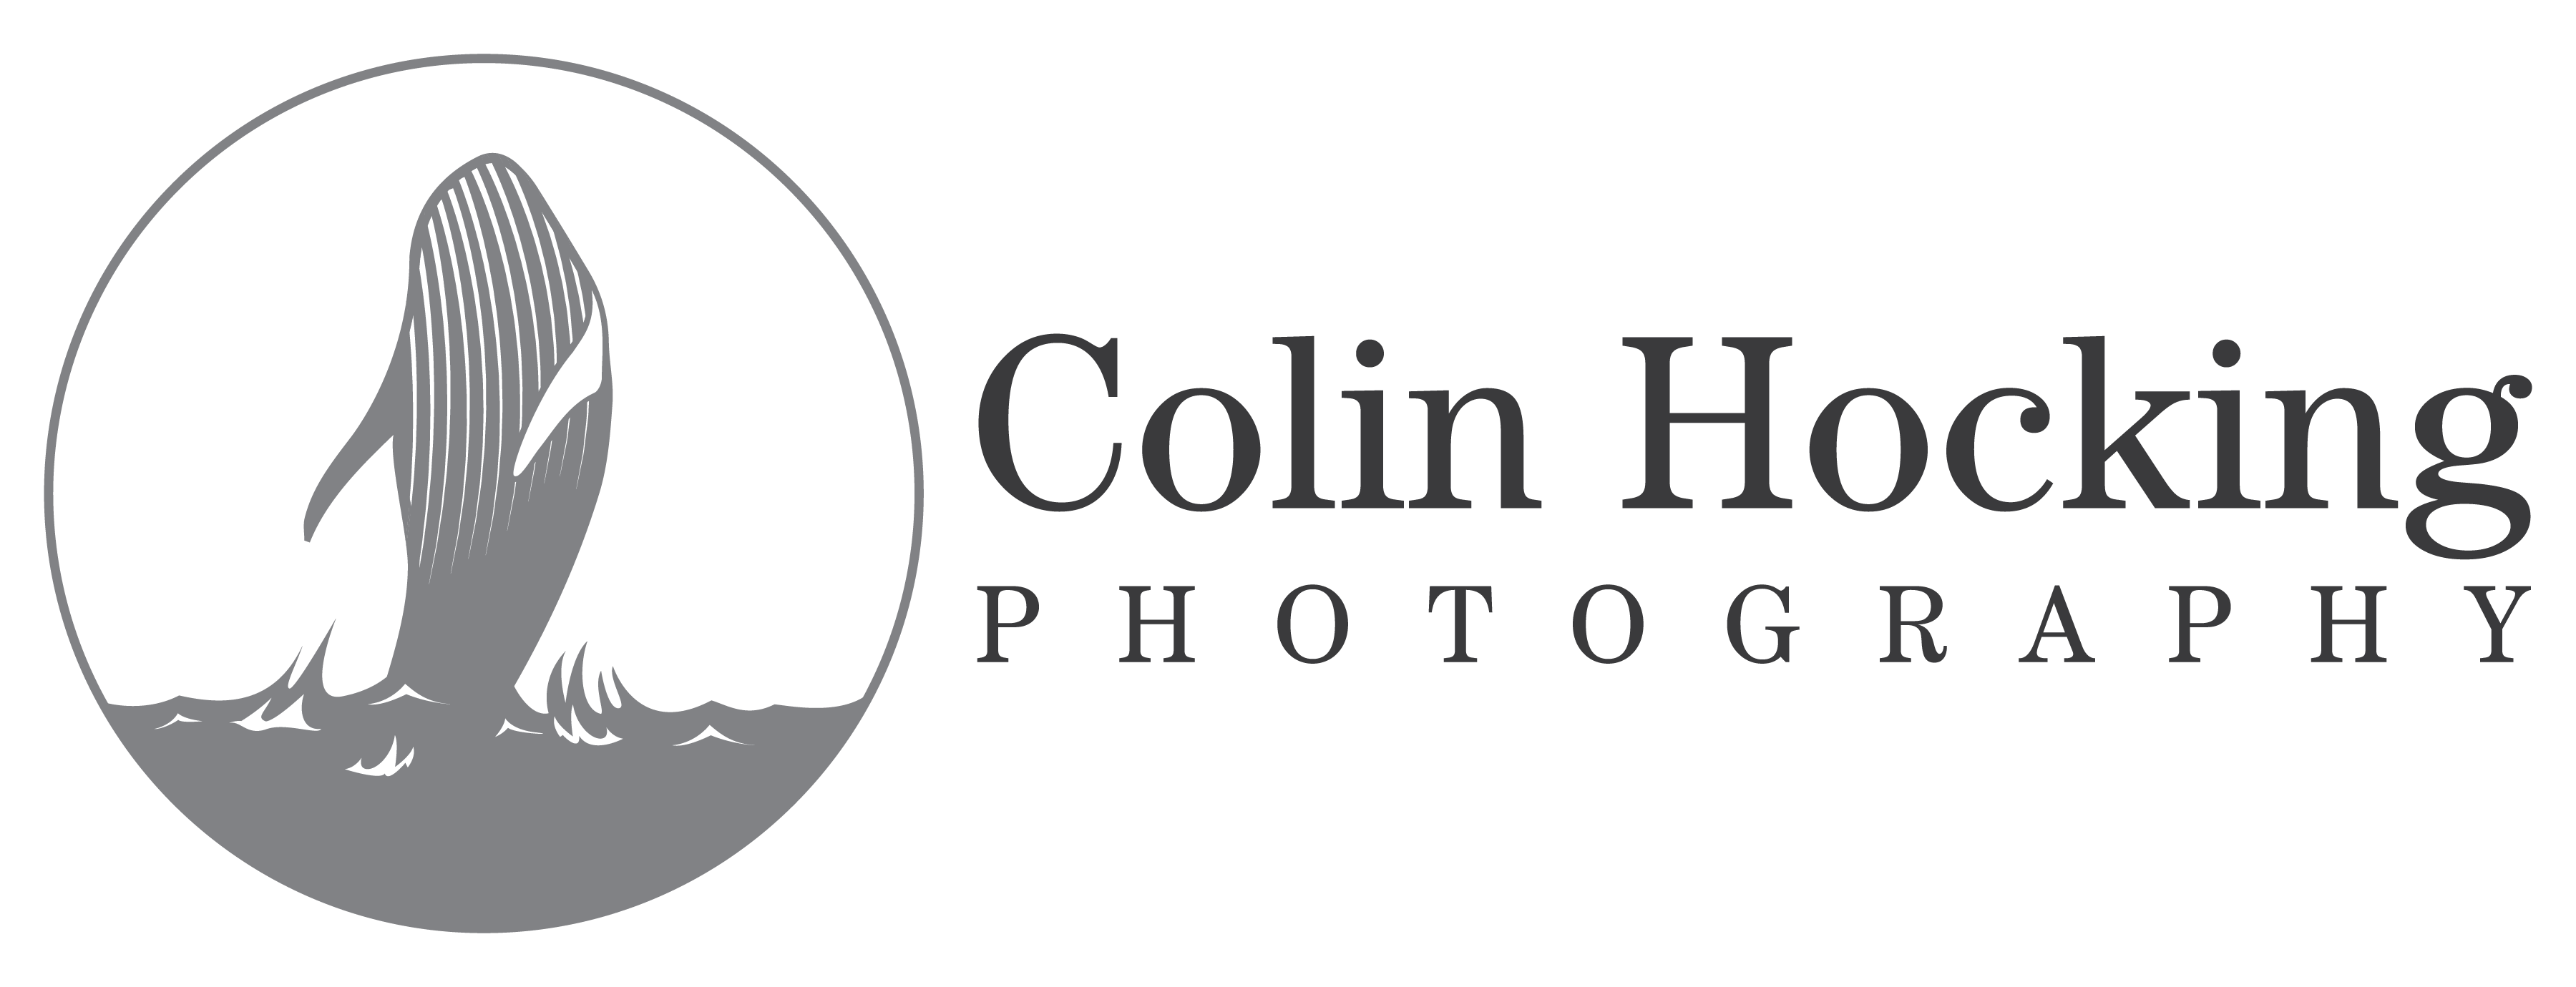 Colin Hocking - Website